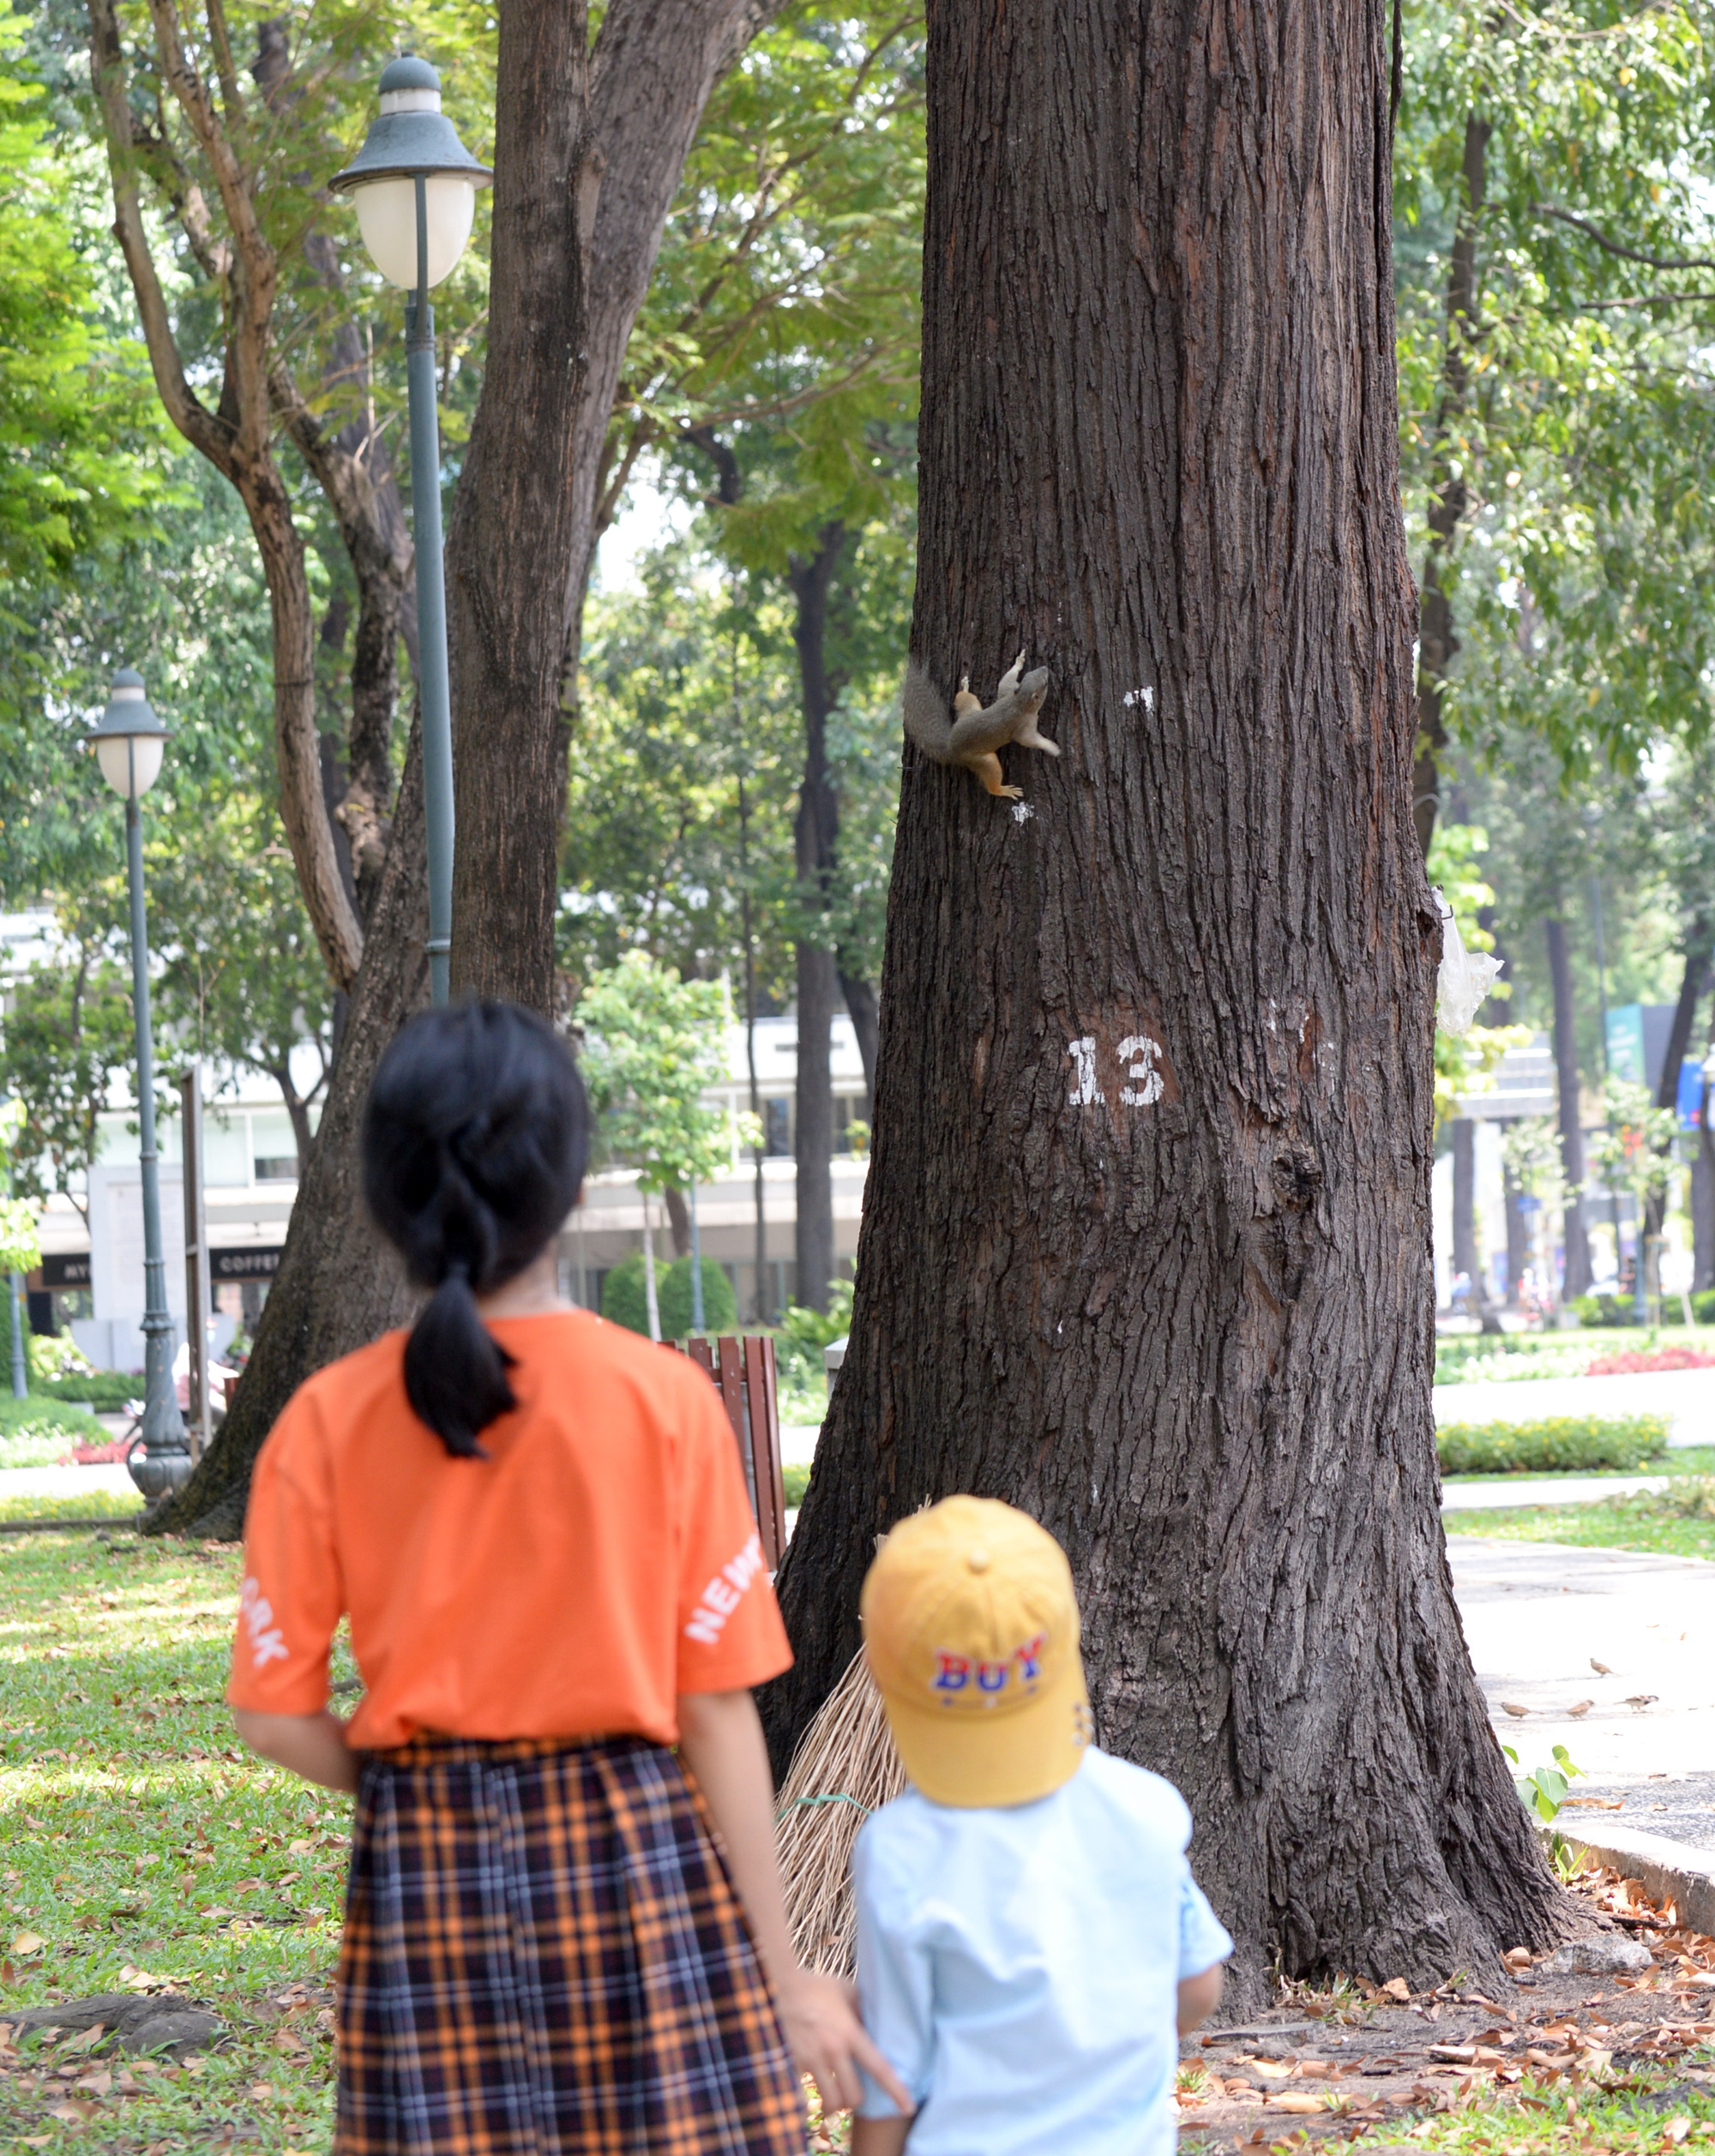 Two children observe squirrels in April 30 Park in Ho Chi Minh City, Vietnam. Photo: T.T.D. / Tuoi Tre